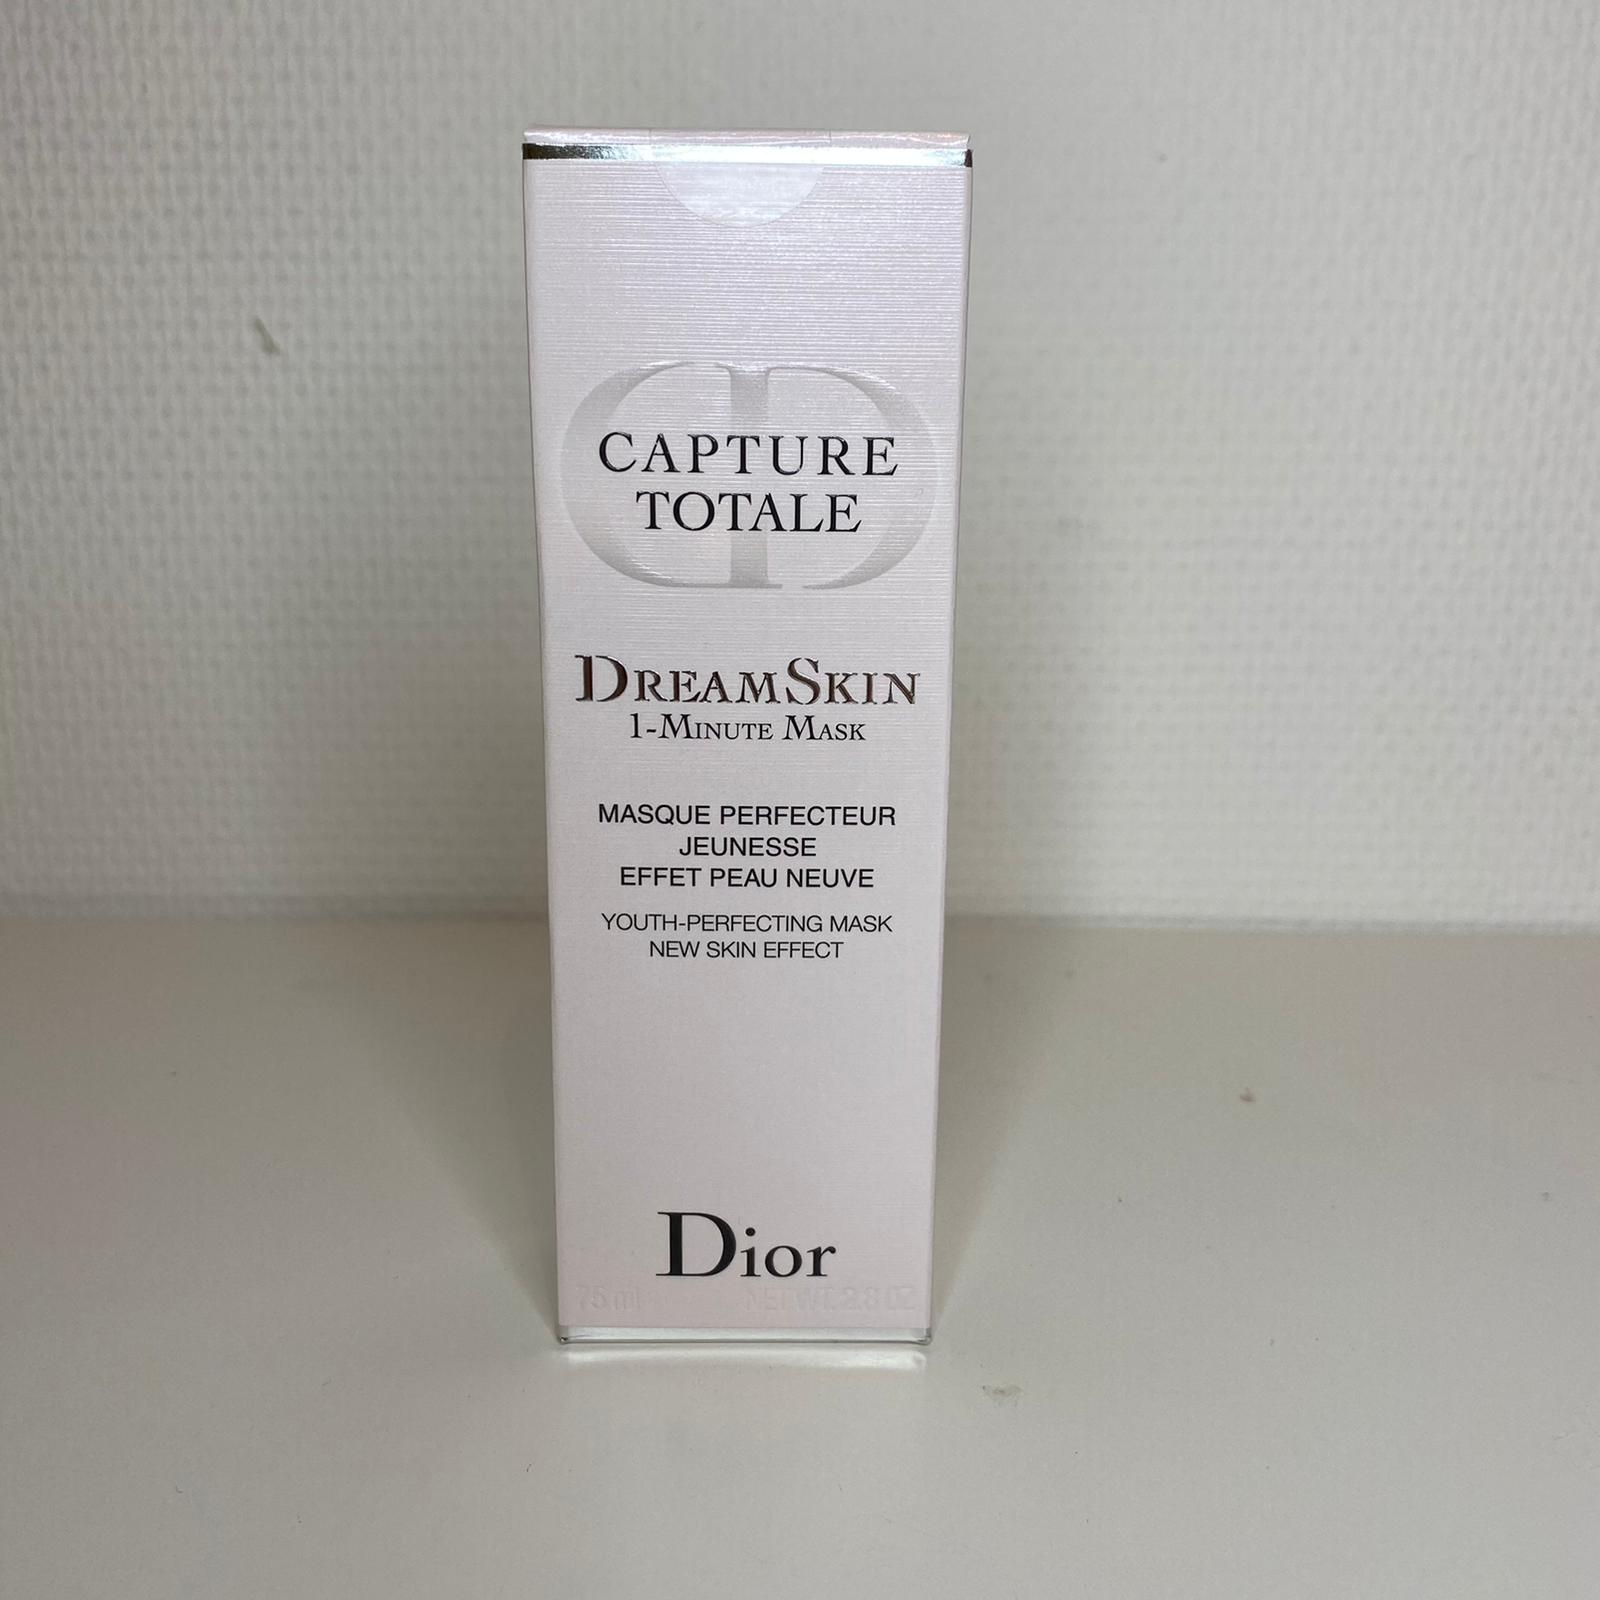 Dior capture totale dream skin 1 minute mask 75 ml